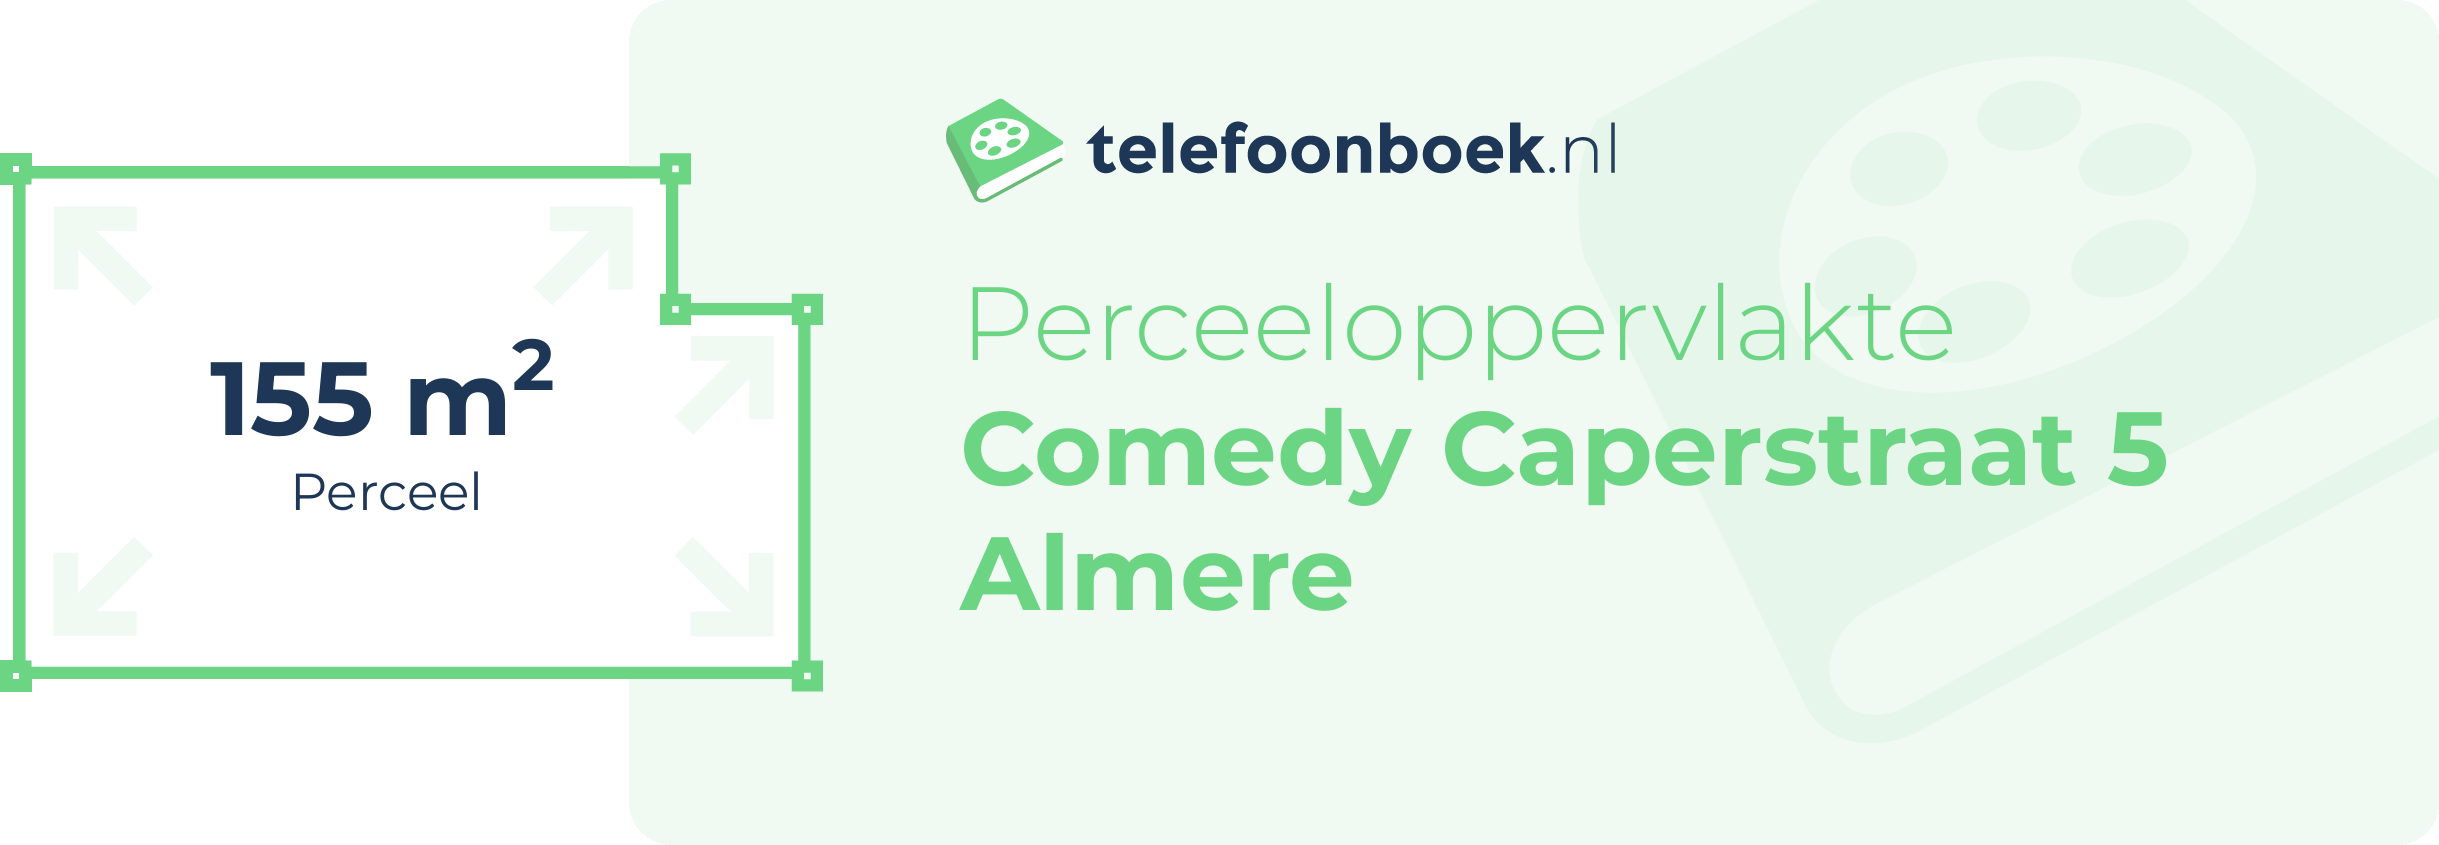 Perceeloppervlakte Comedy Caperstraat 5 Almere